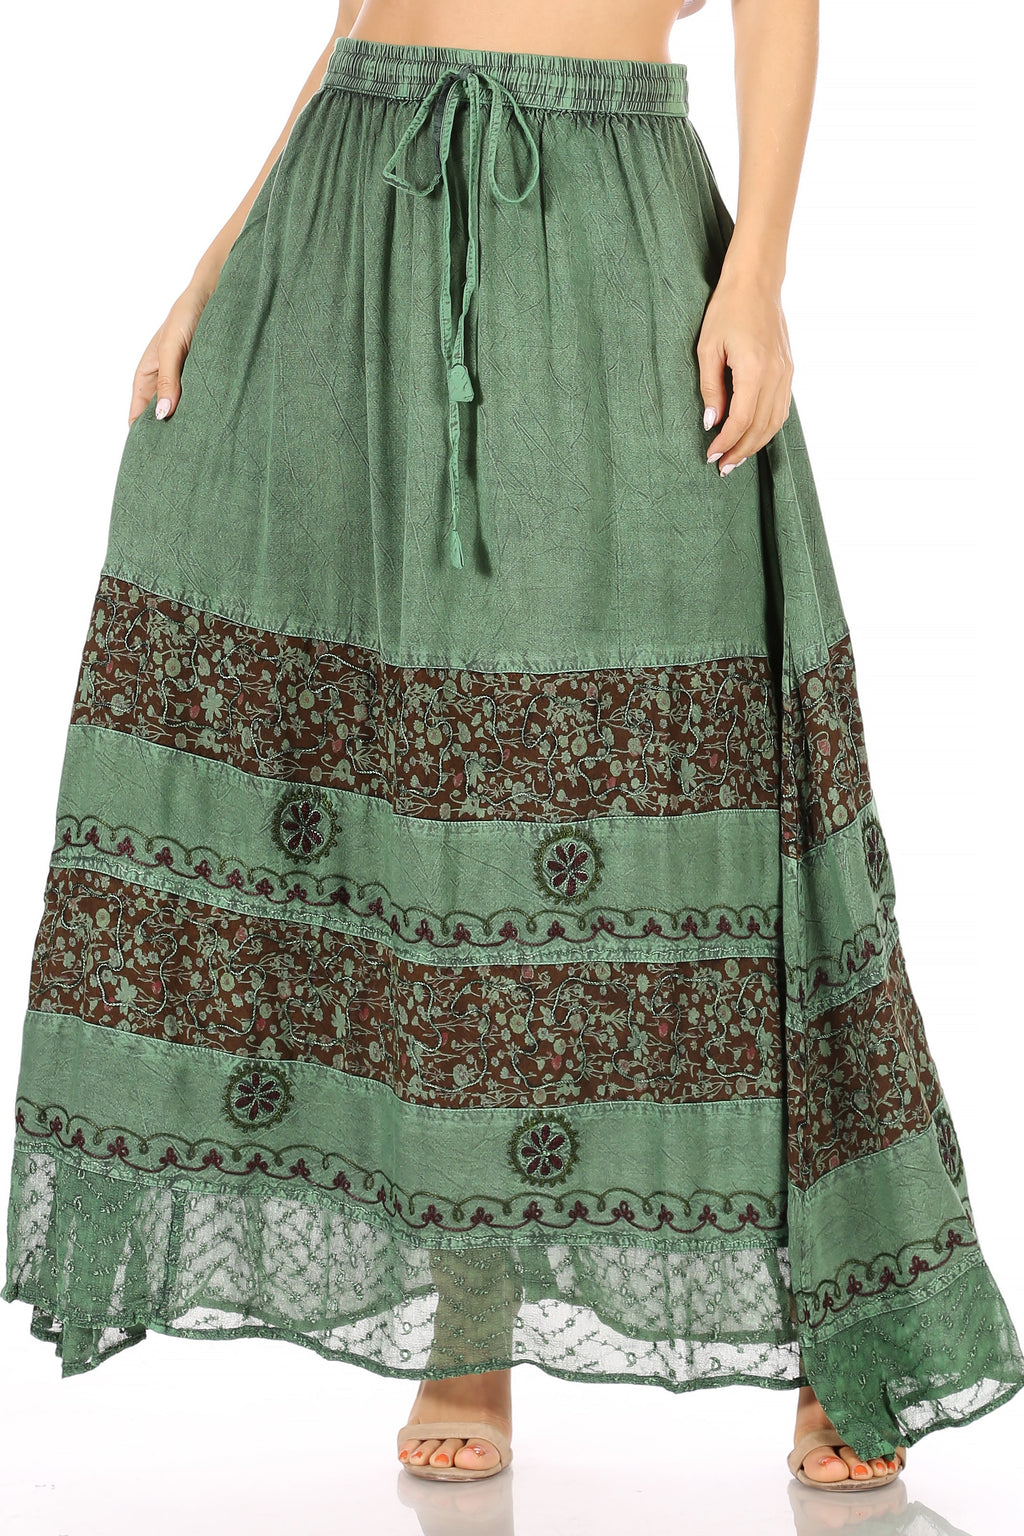 Sakkas Sandra Women's Casual Long Maxi Boho Gypsy Skirt Elastic Waist